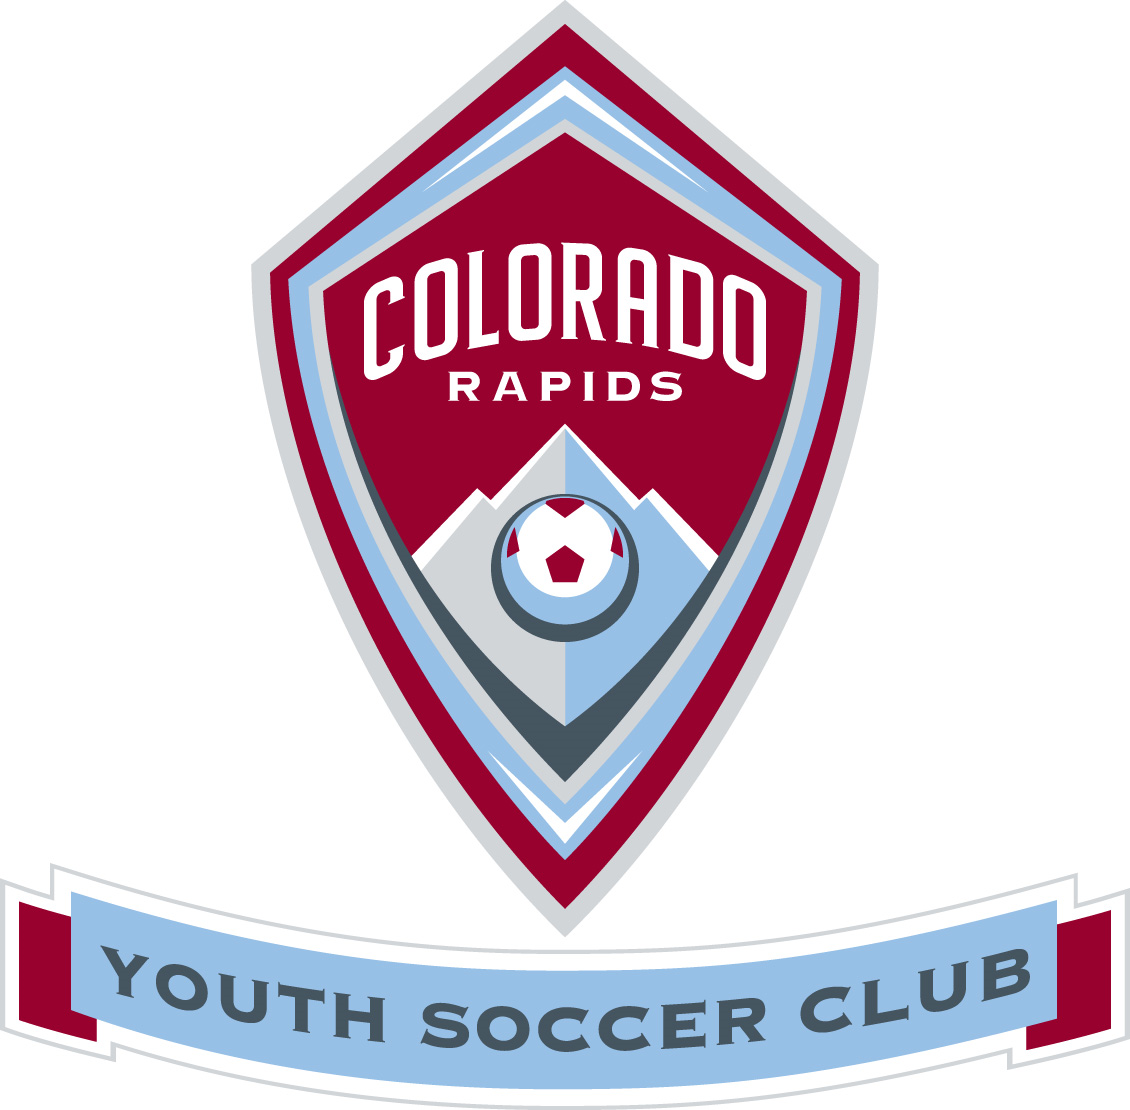 Colorado rapids youth soccer logo